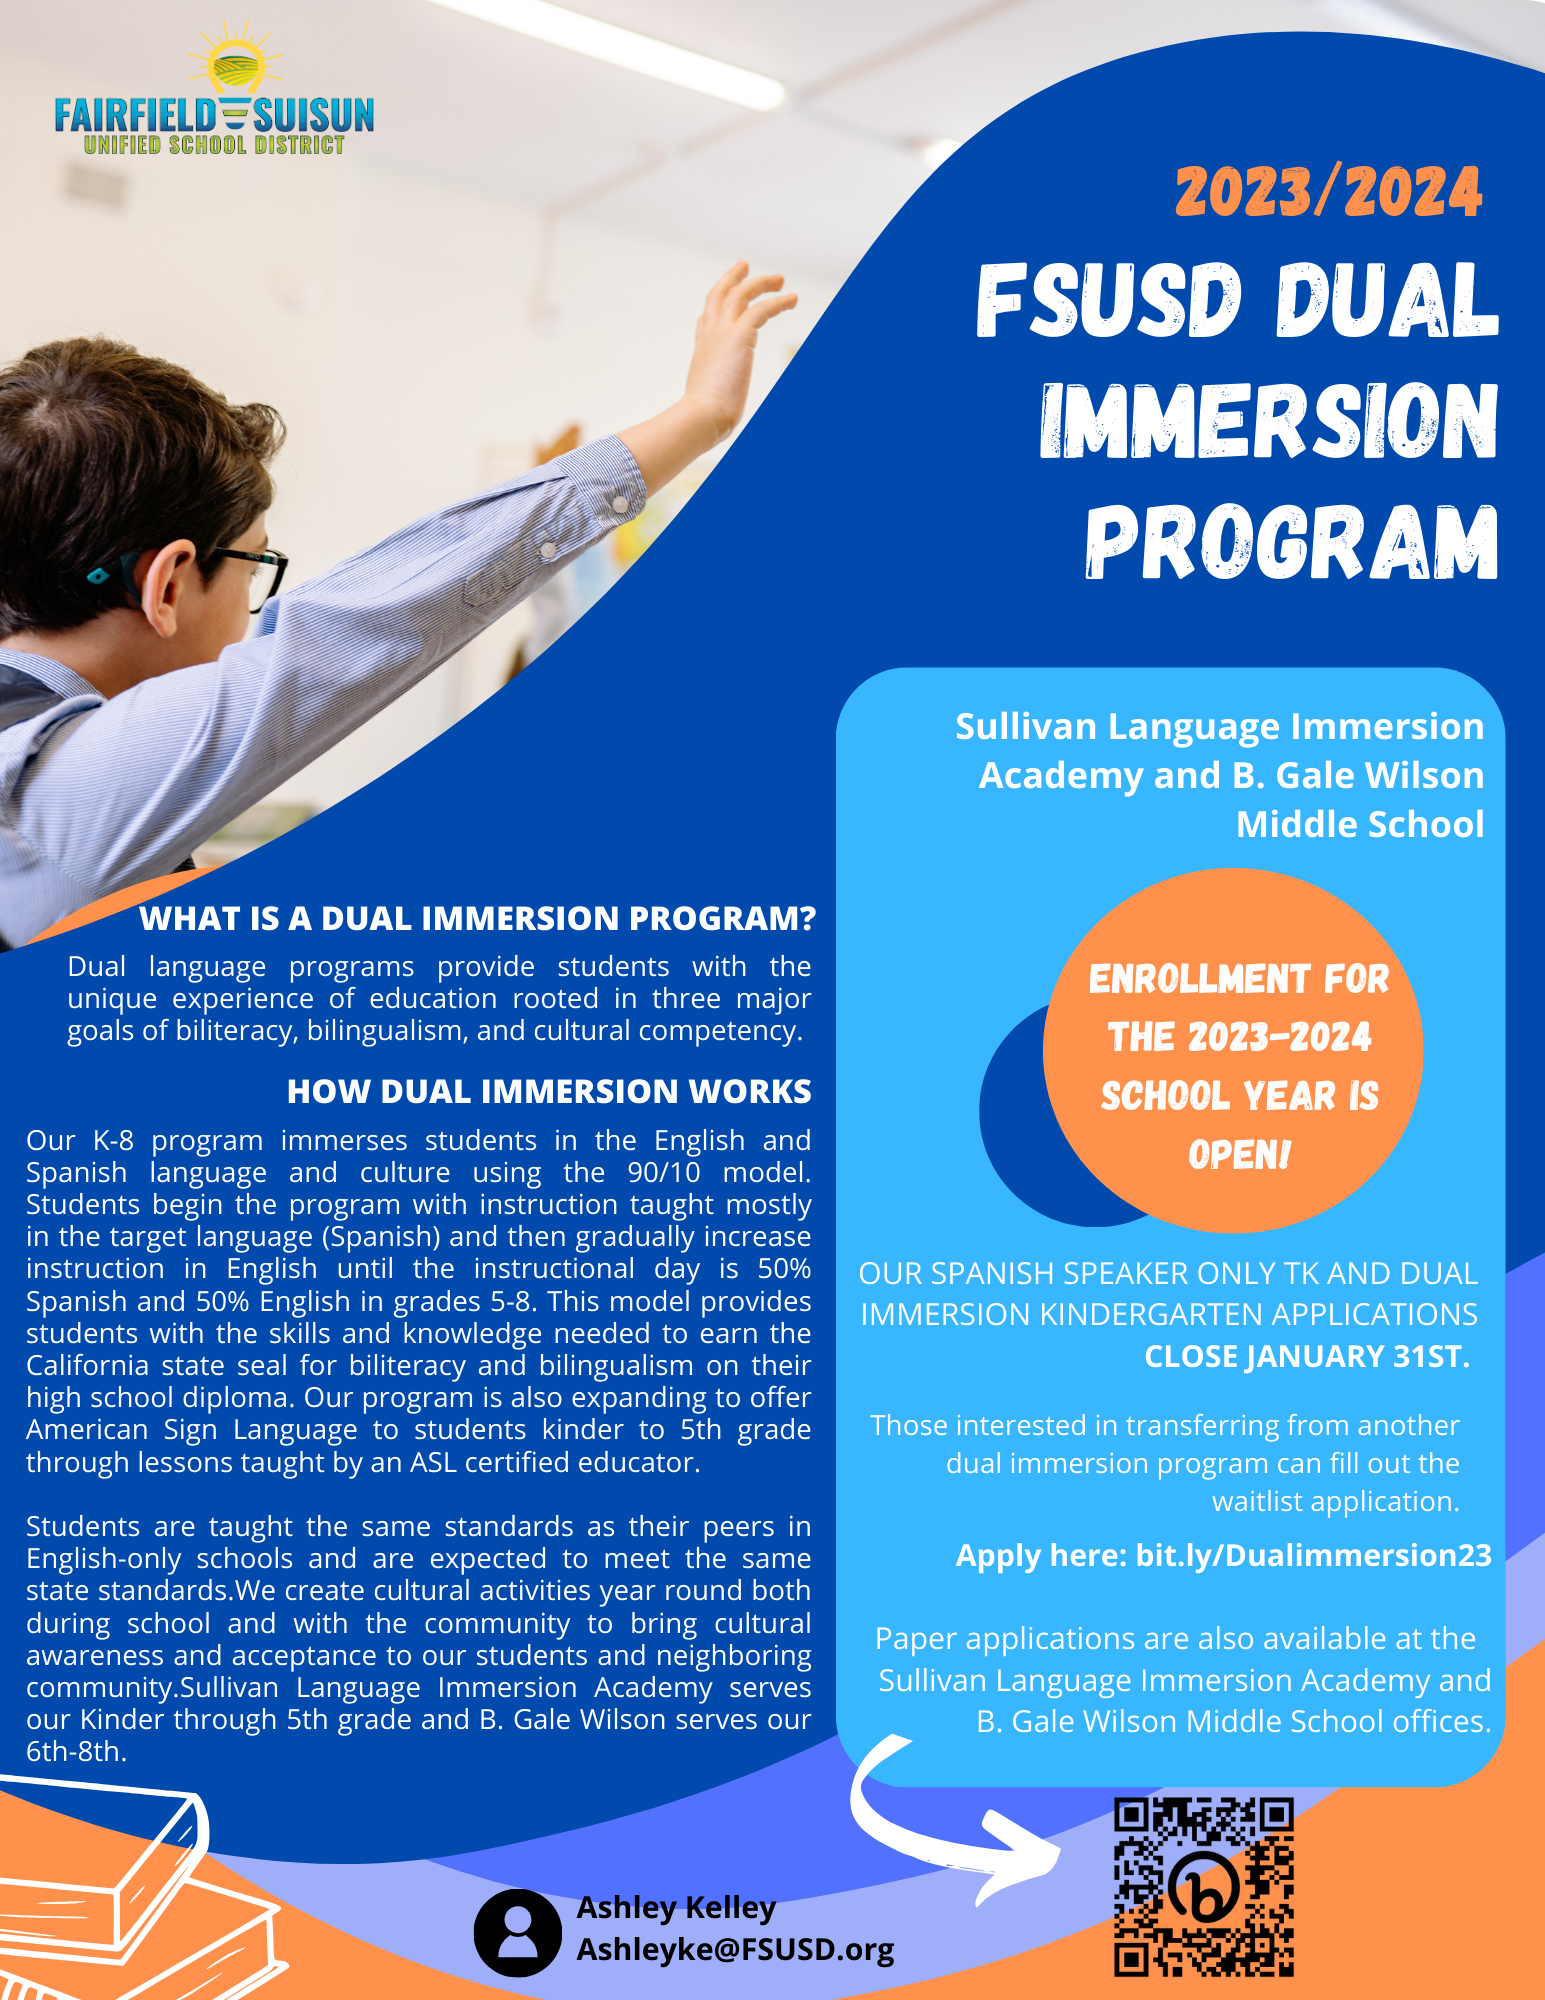 Dual Immersion Program at Sullivan Language Immersion Academy